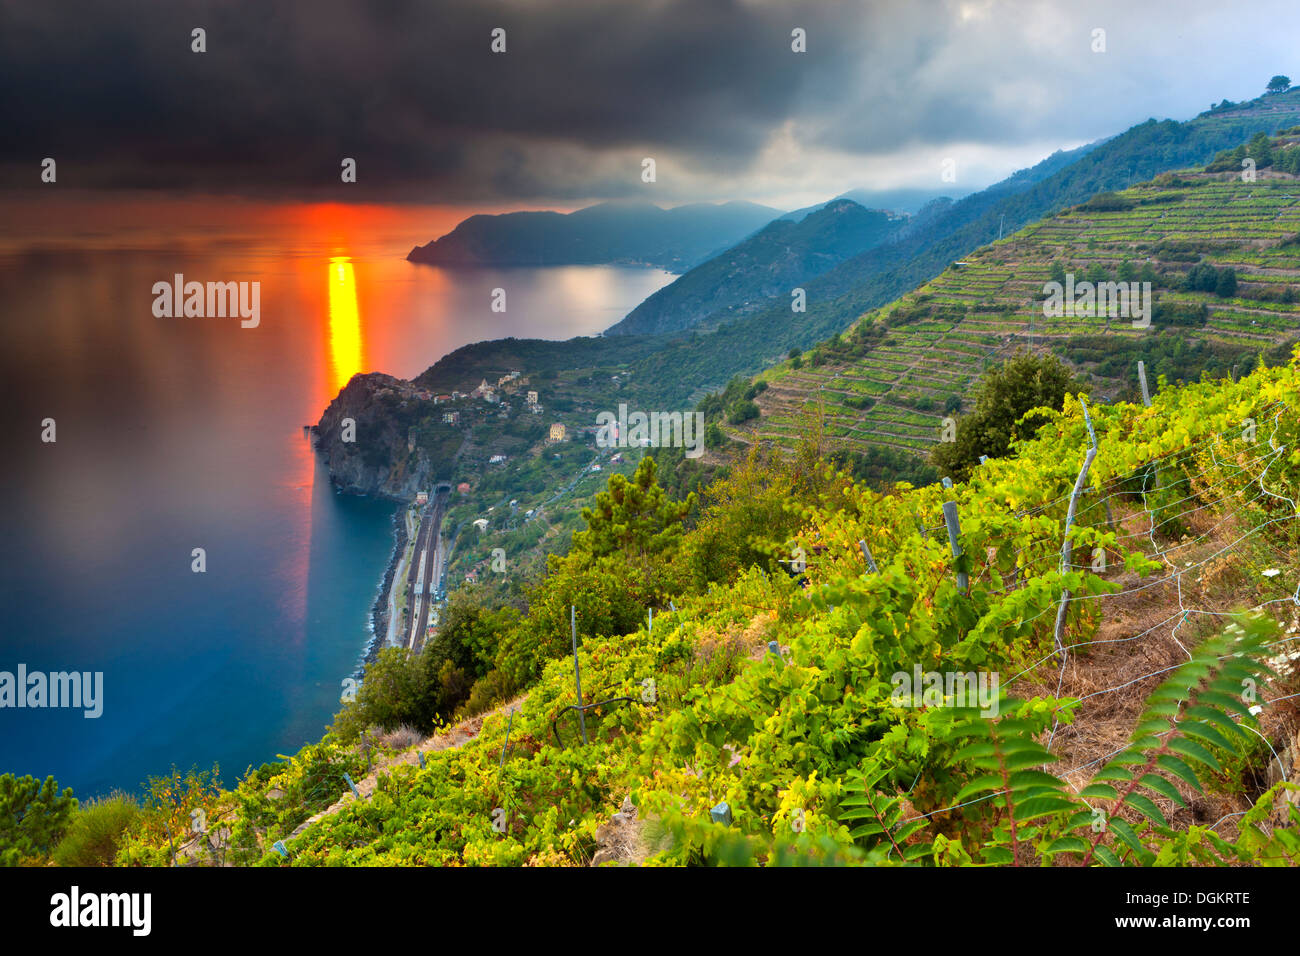 A vineyard overlooks the coast on the cliffs of the Mediterranean along the Italian Riviera. Stock Photo